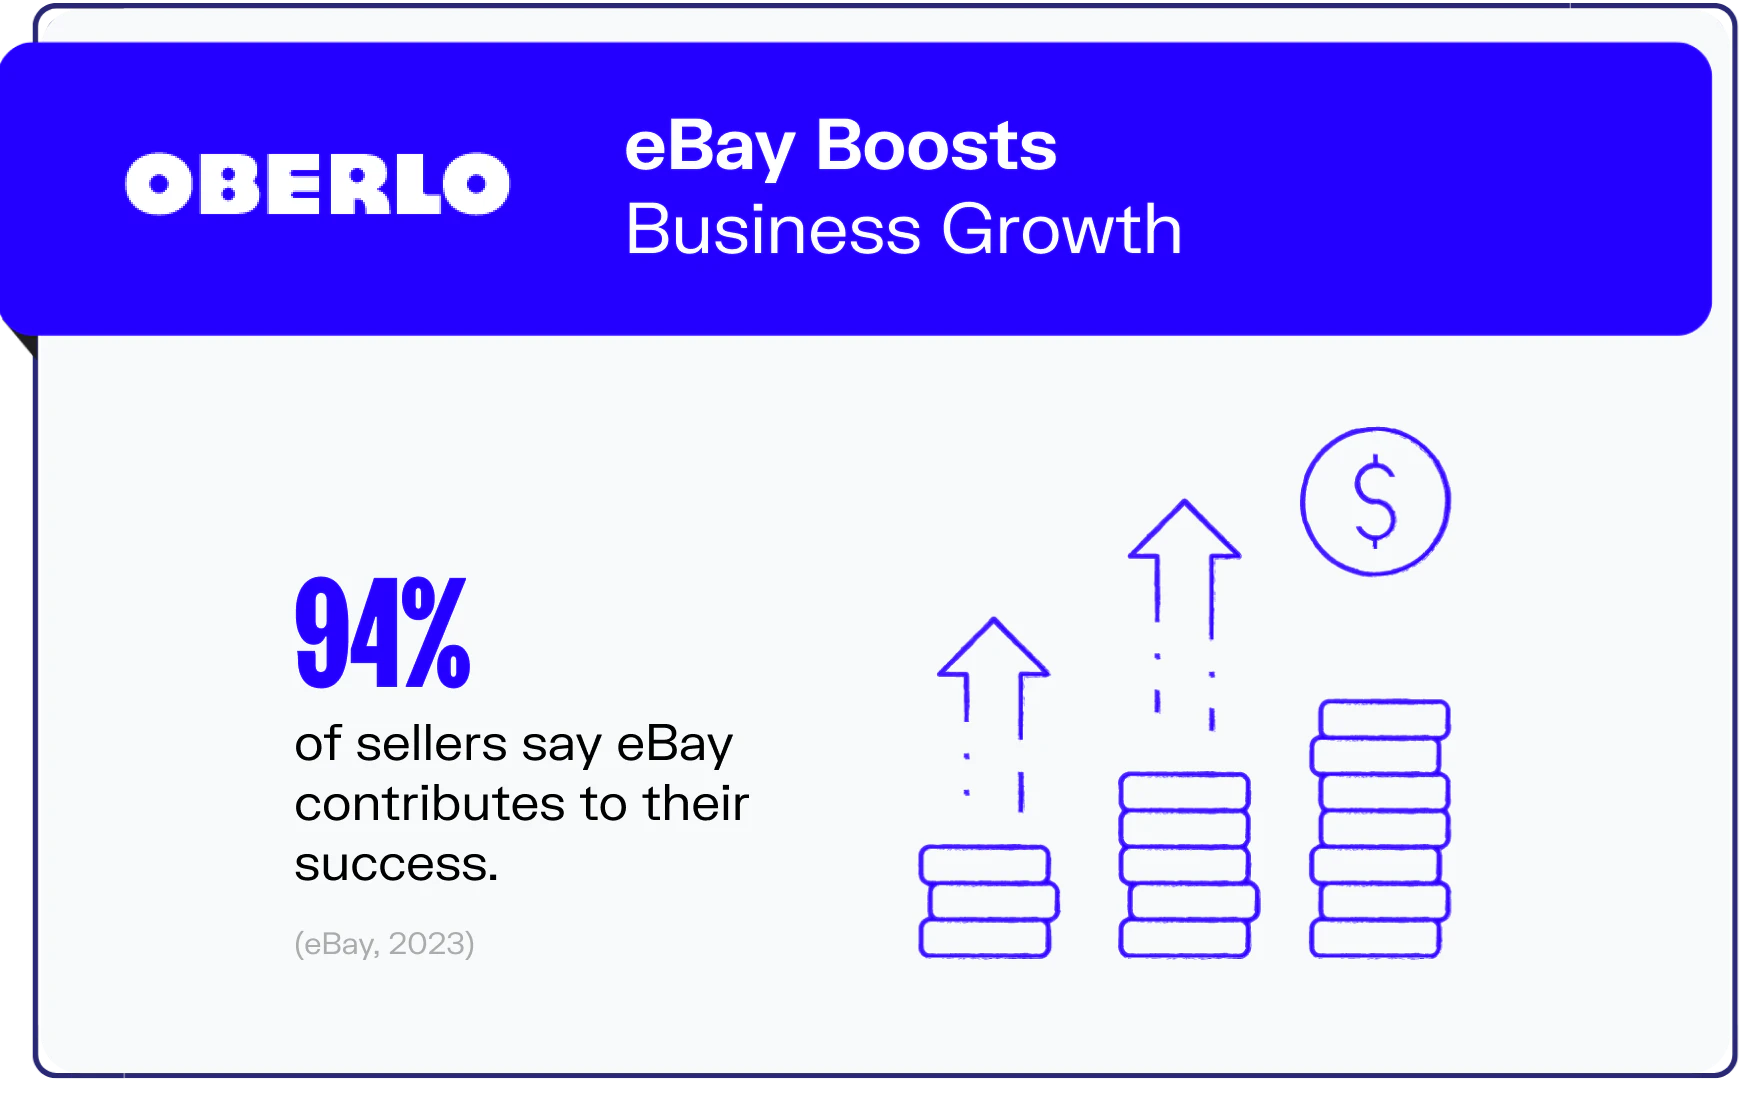 ebay statistics graphic9